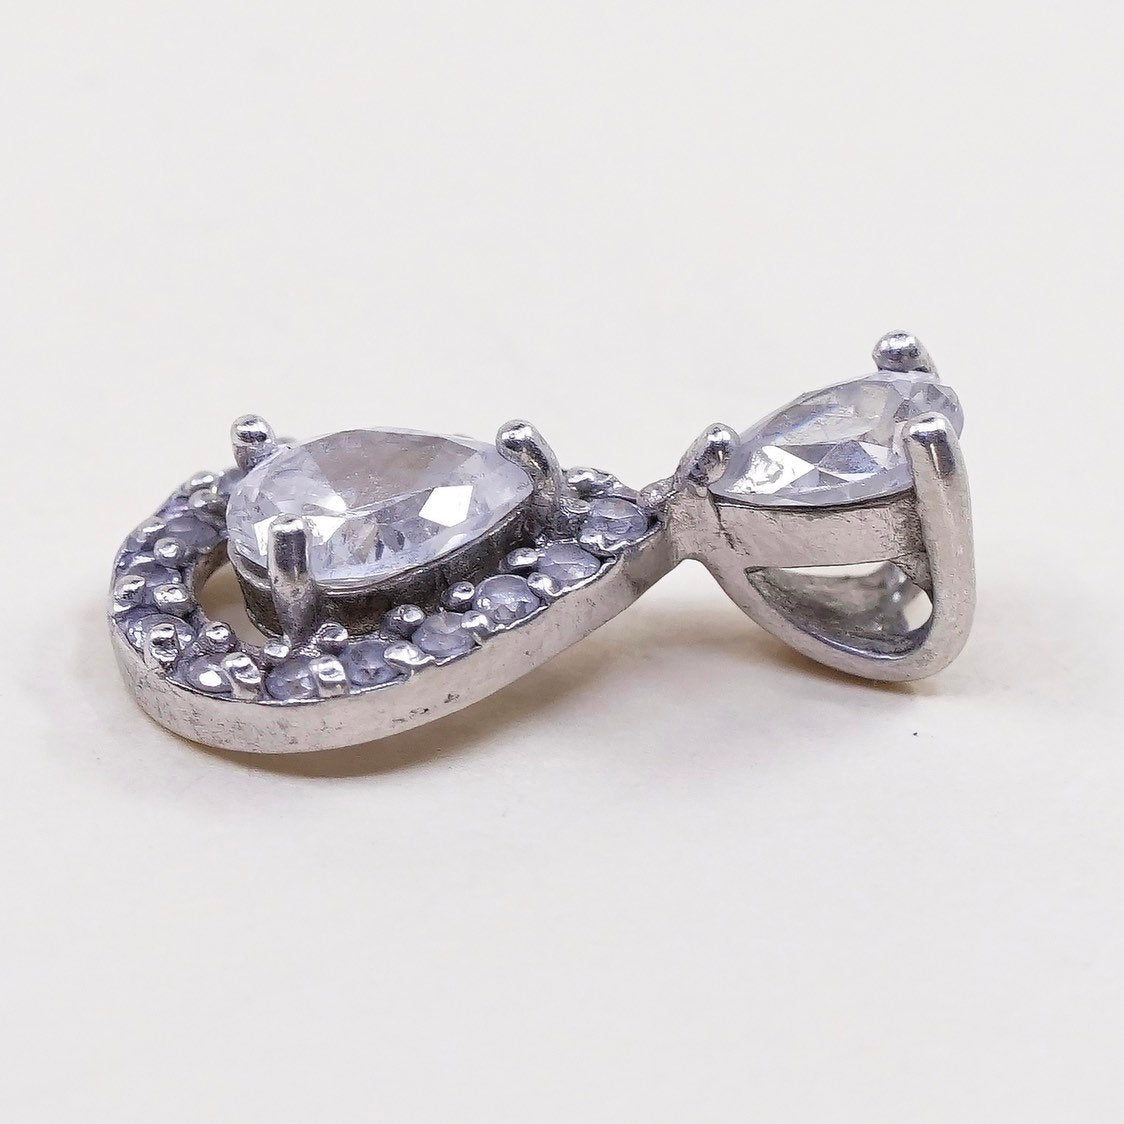 Vintage sterling silver cz crystal pendant, 925 silver teardrop pendant